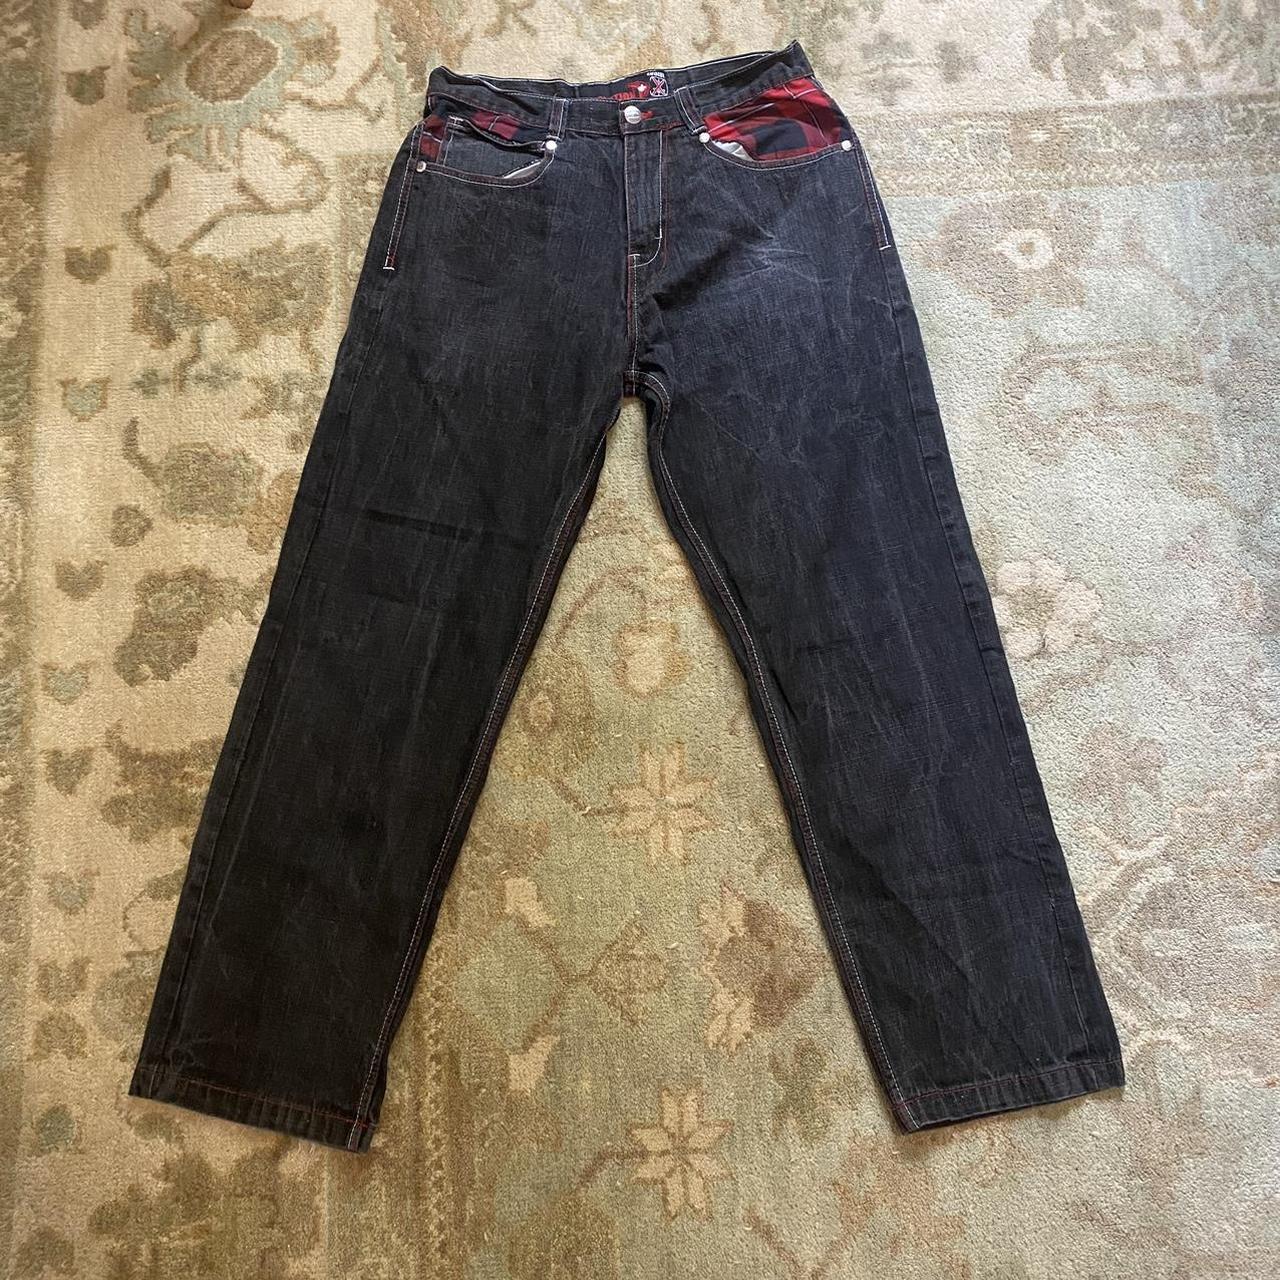 American Vintage Men's Black and Red Jeans | Depop